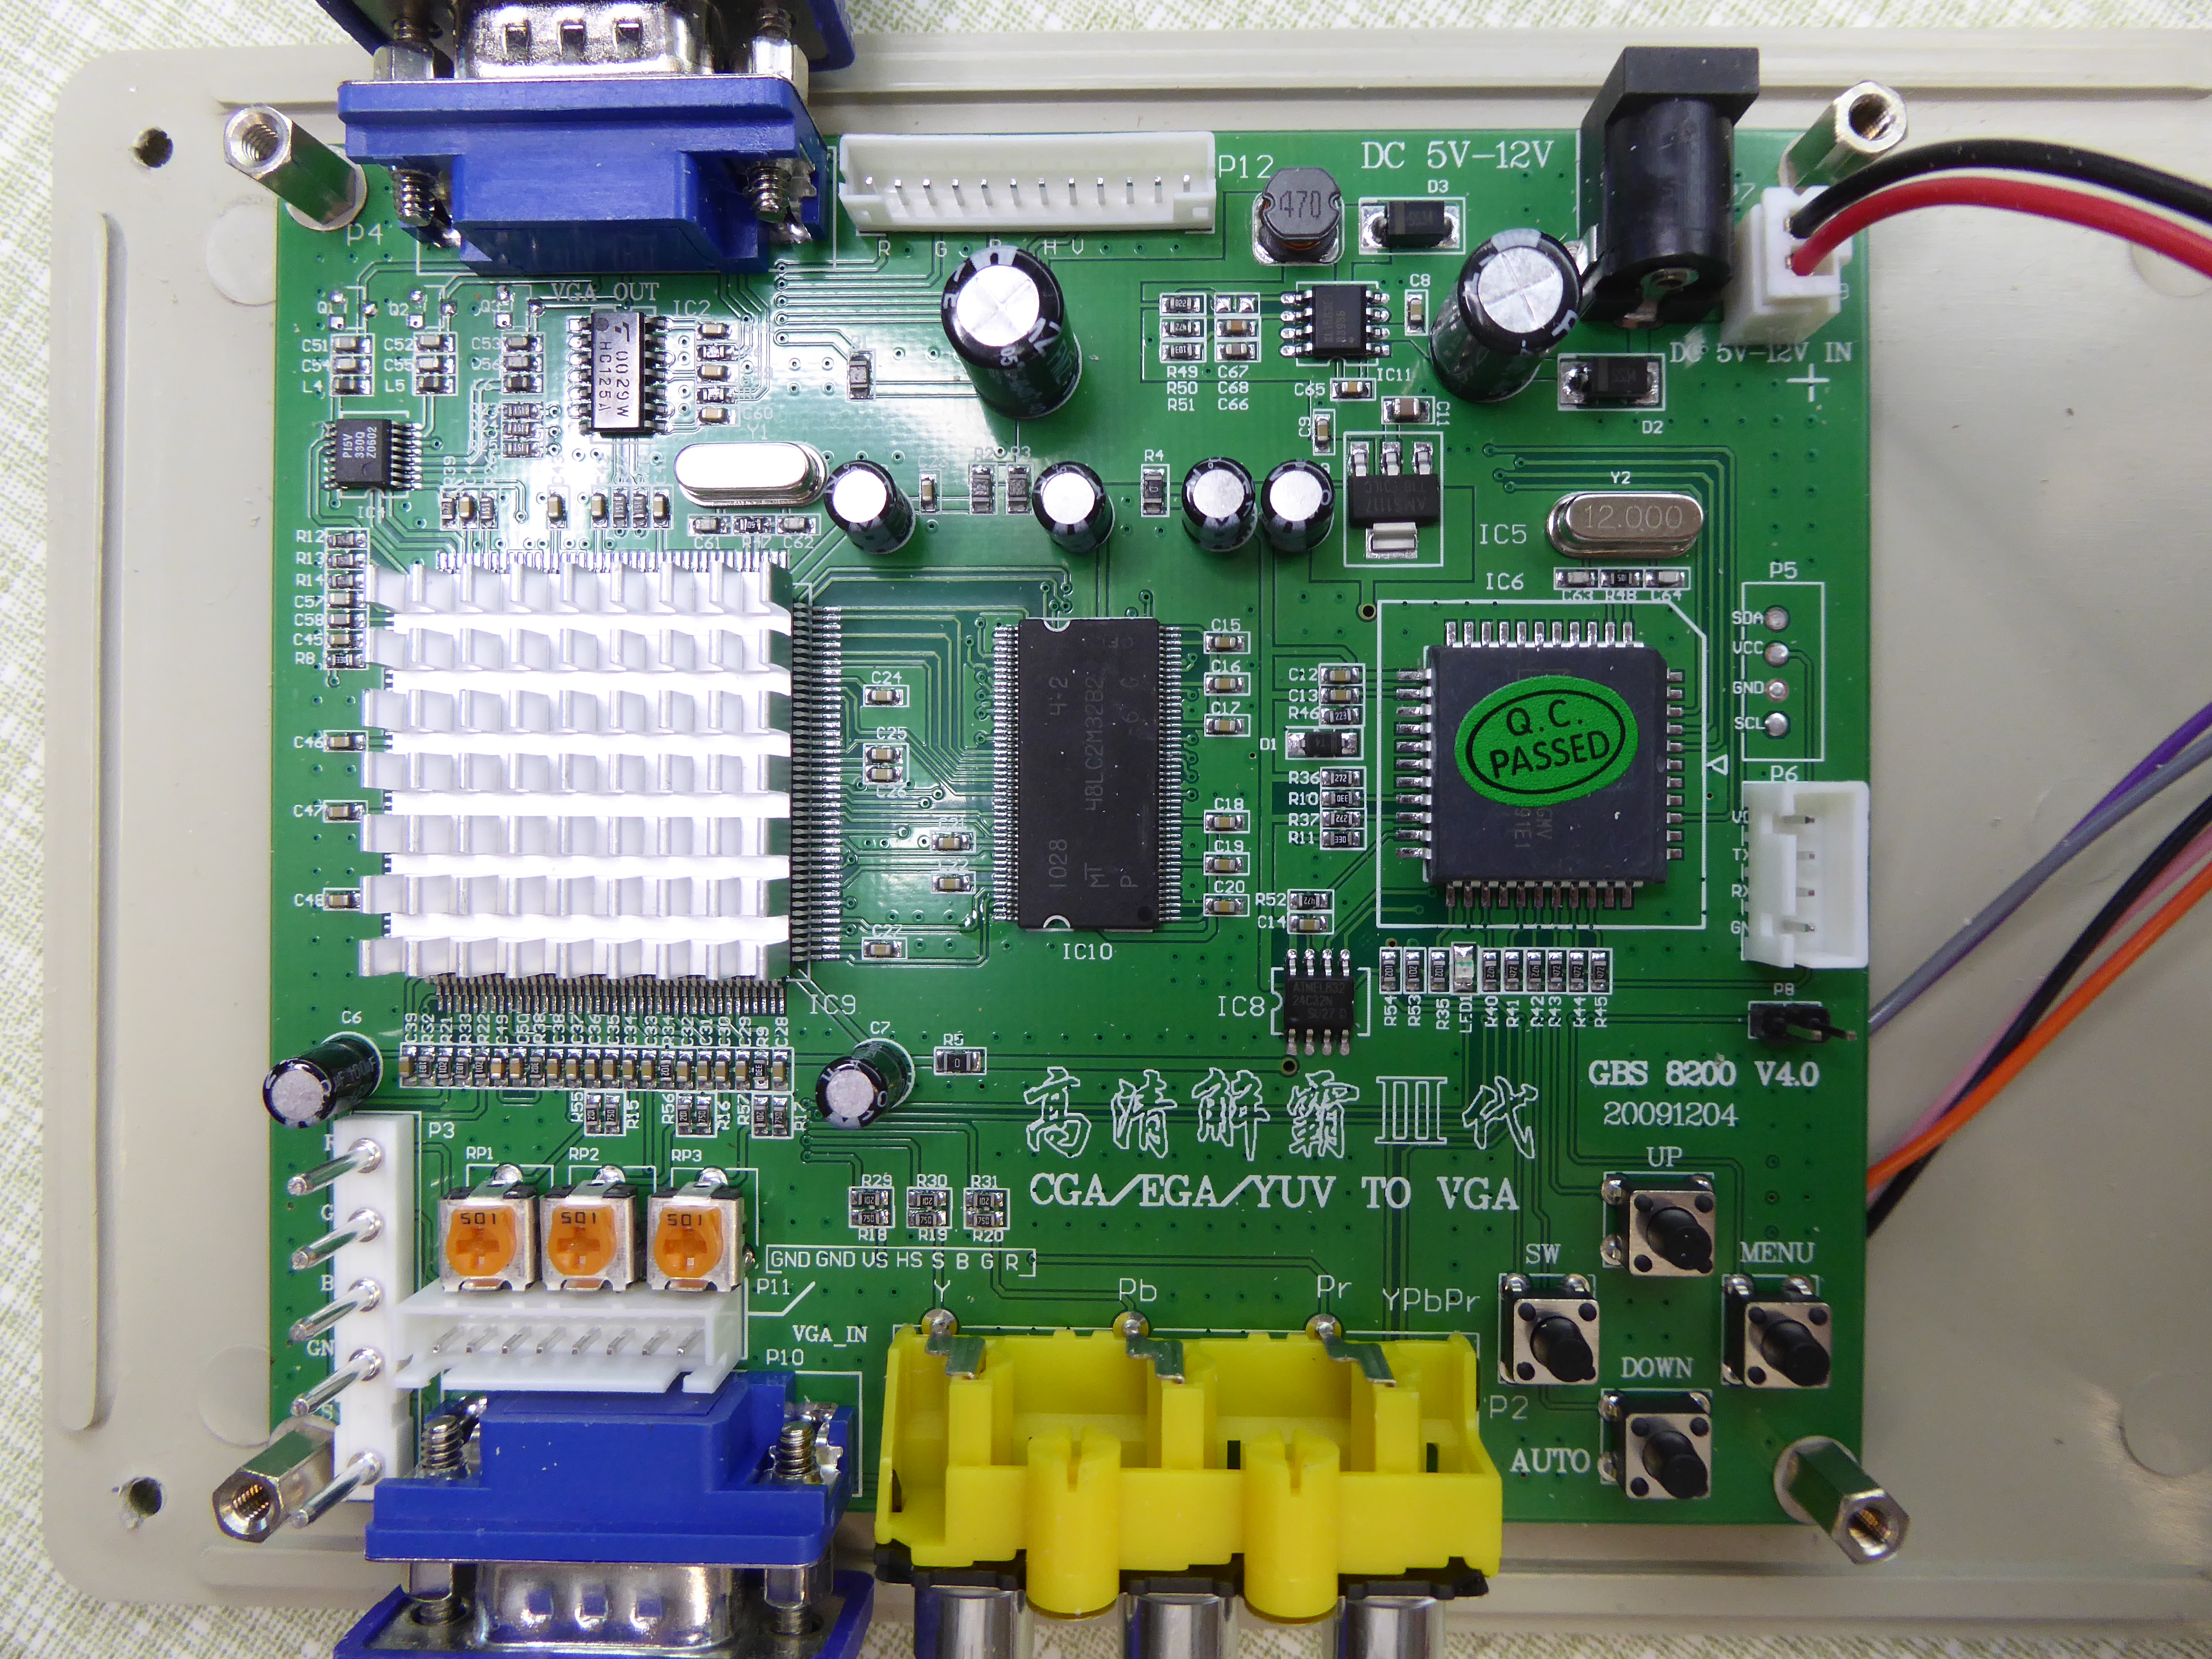 GBS8200 RGB to VGA Converter